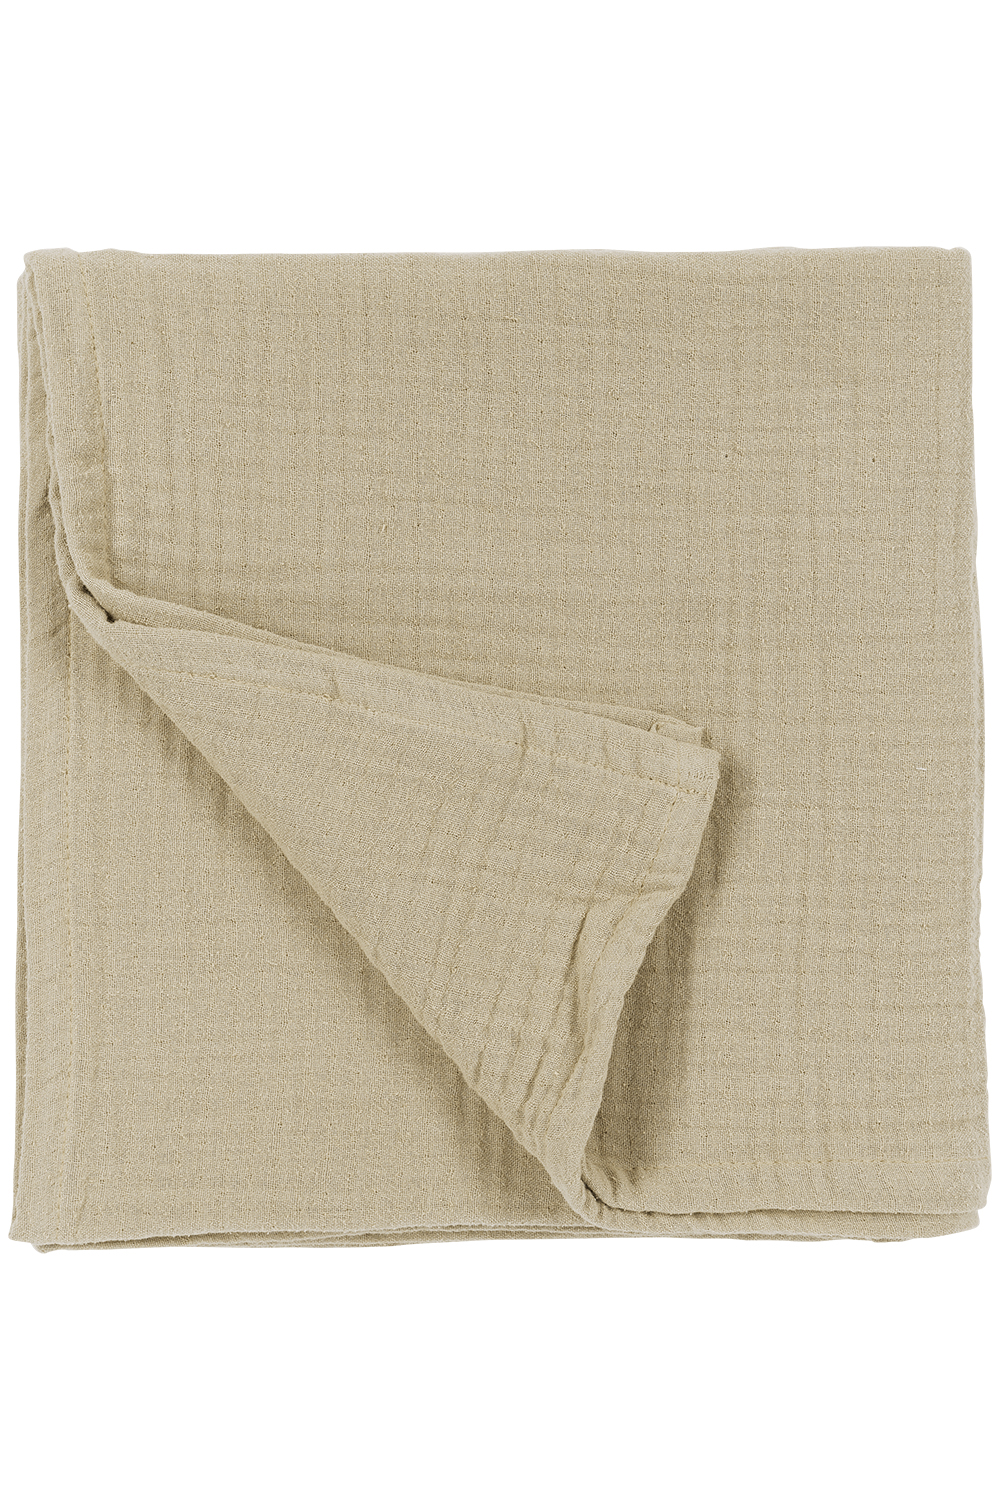 Blanket pre-washed muslin Uni - sand - 140x200cm